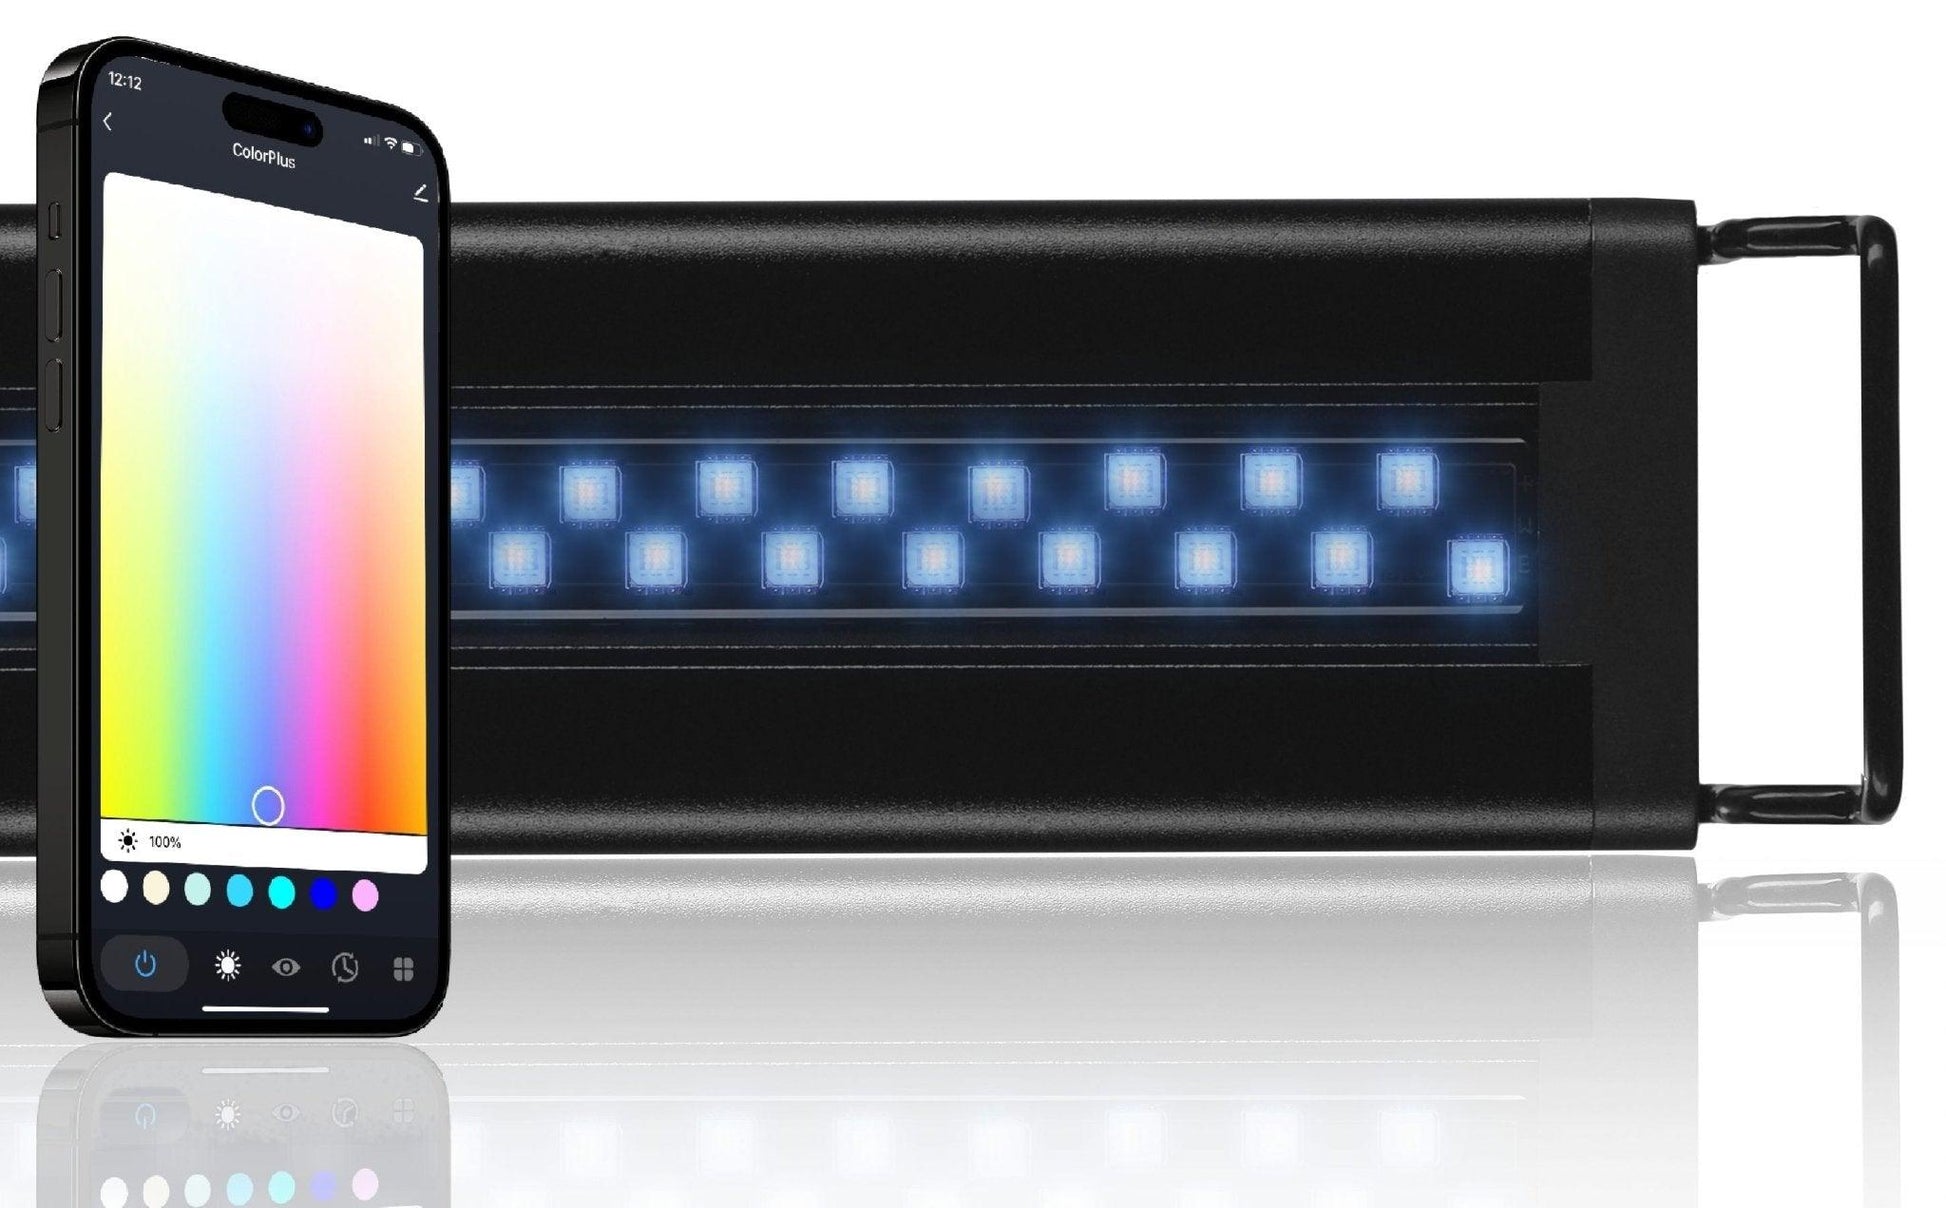 Current Vita ColorPlus Smart Aquarium Light with Voice Control (Alexa and Google Home Compatible) - Vita